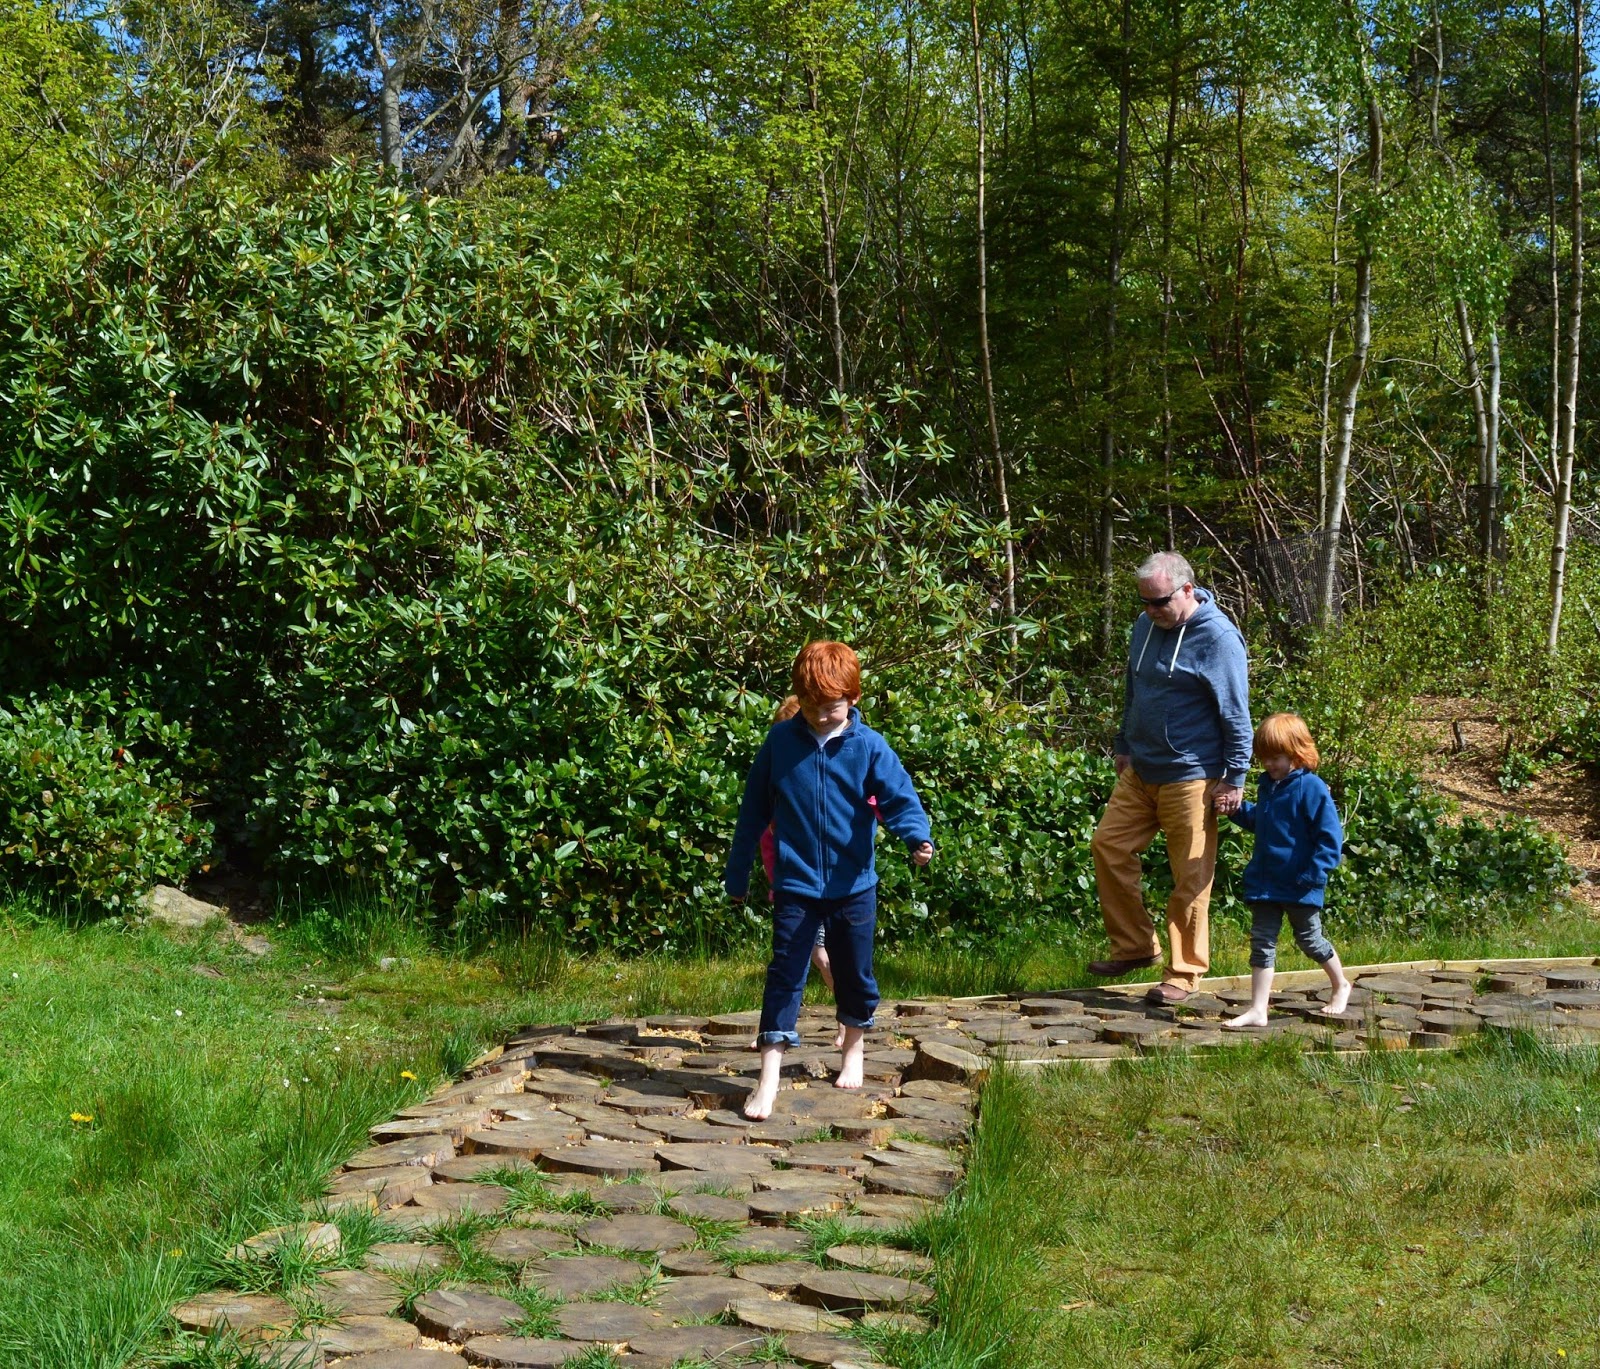 The Labyrinth at Cragside - barefoot walk